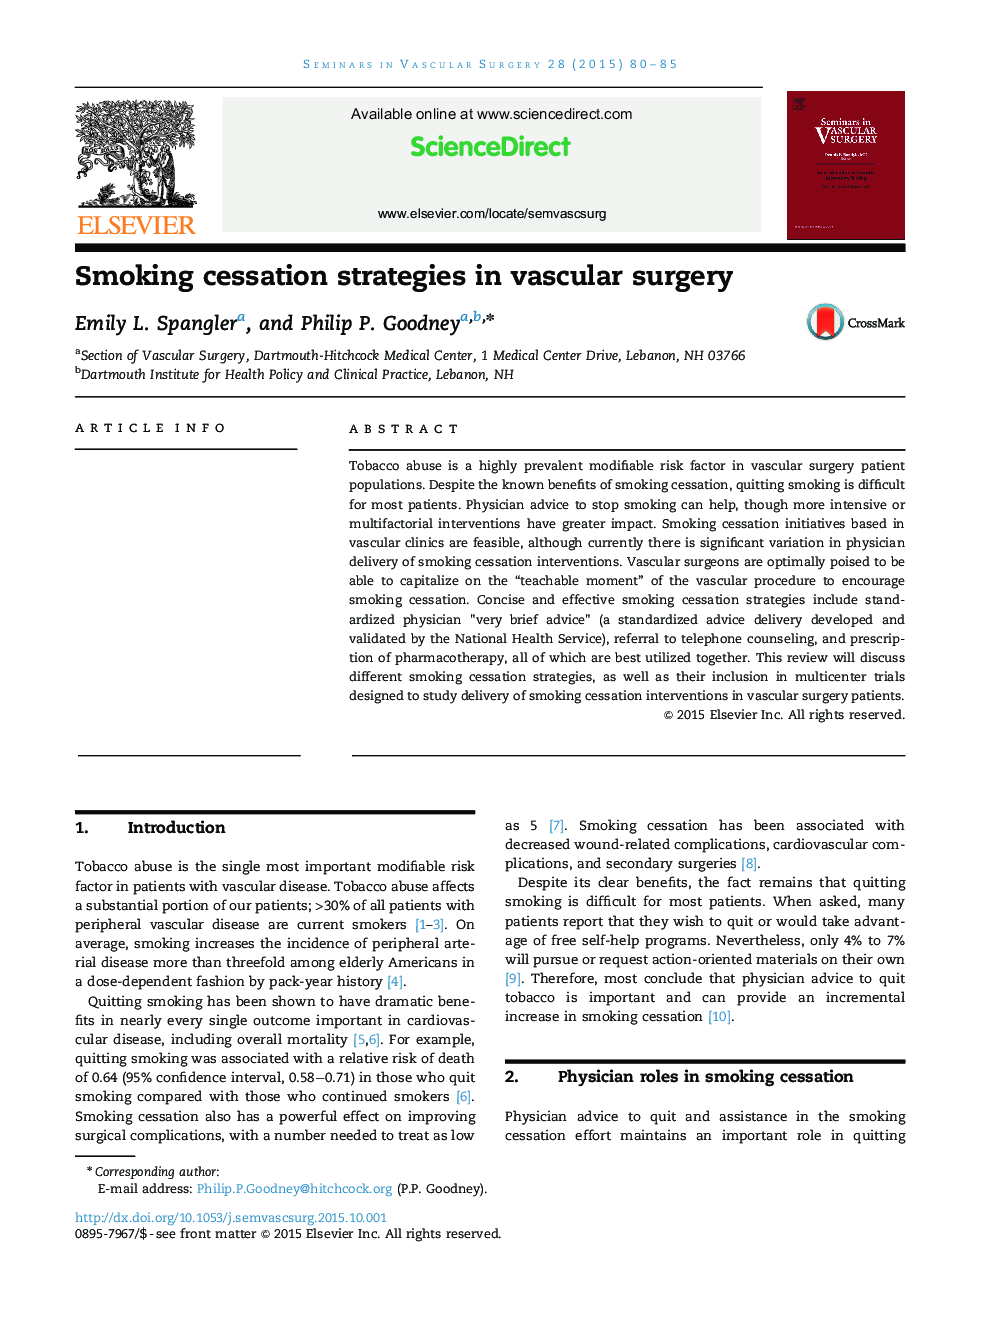 Smoking cessation strategies in vascular surgery